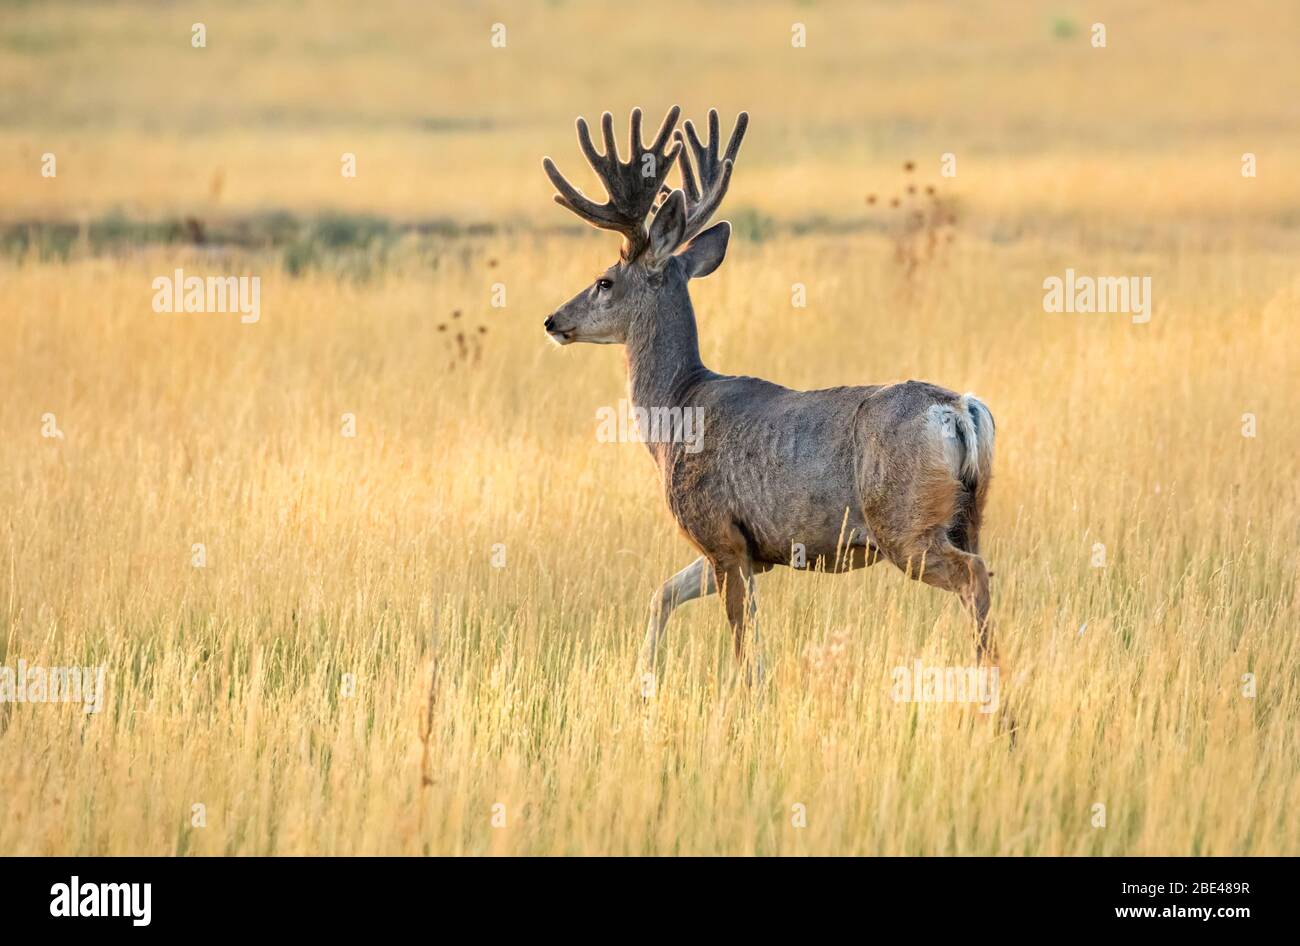 Mule deer (Odocoileus hemionus) stag with antlers walking in a golden field; Steamboat Springs, Colorado, United States of America Stock Photo